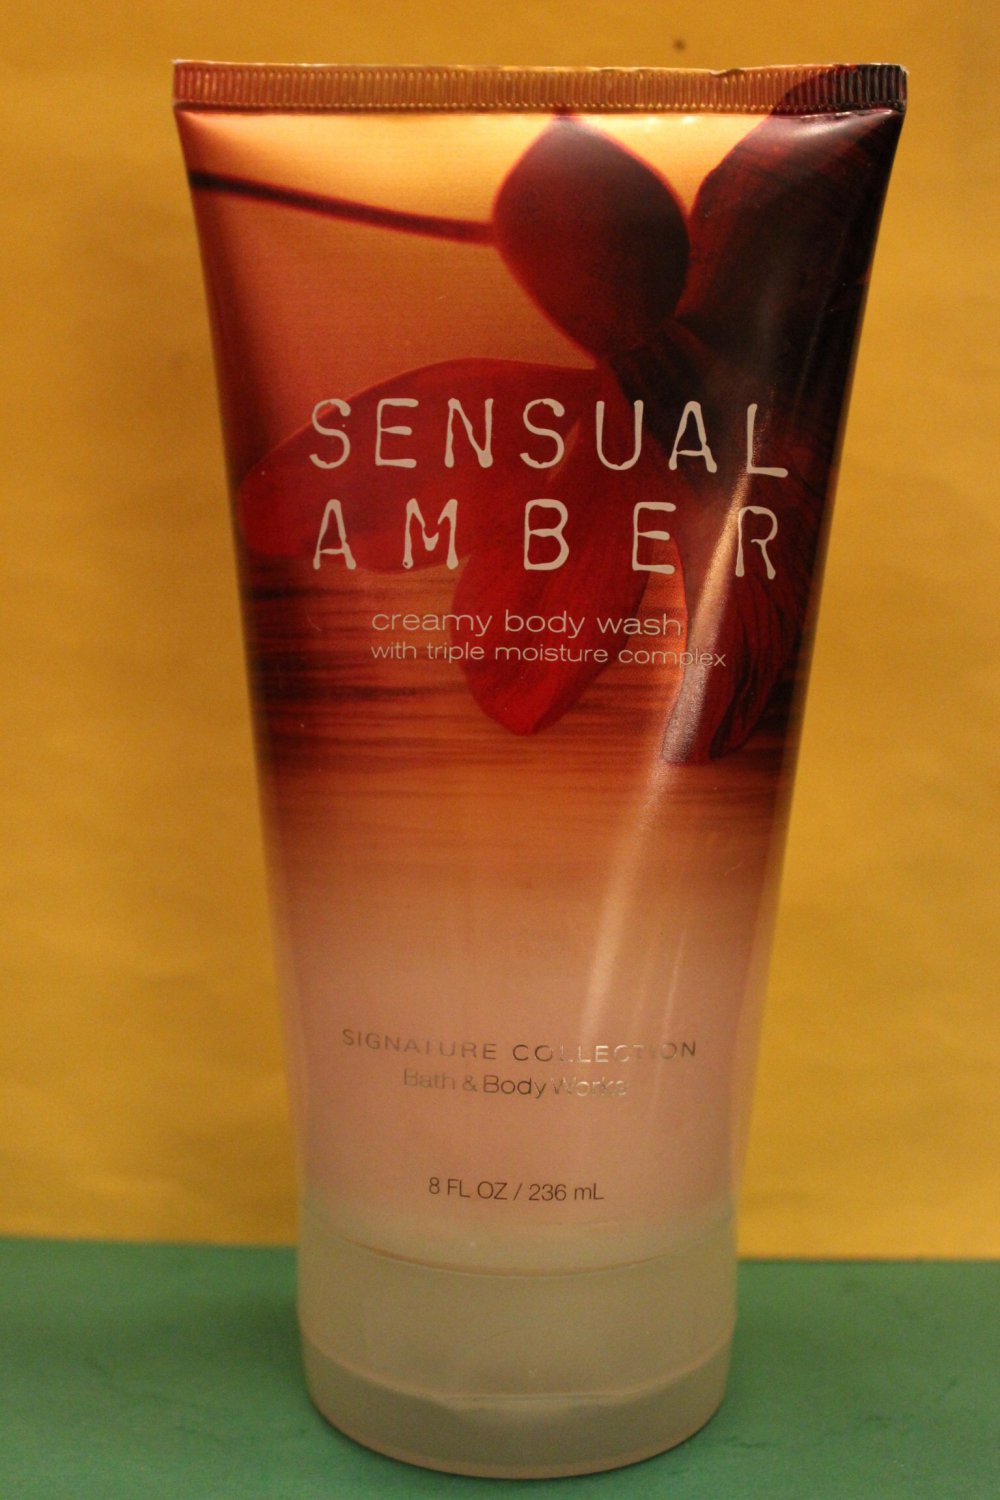 Sensual Amber Shower Gel